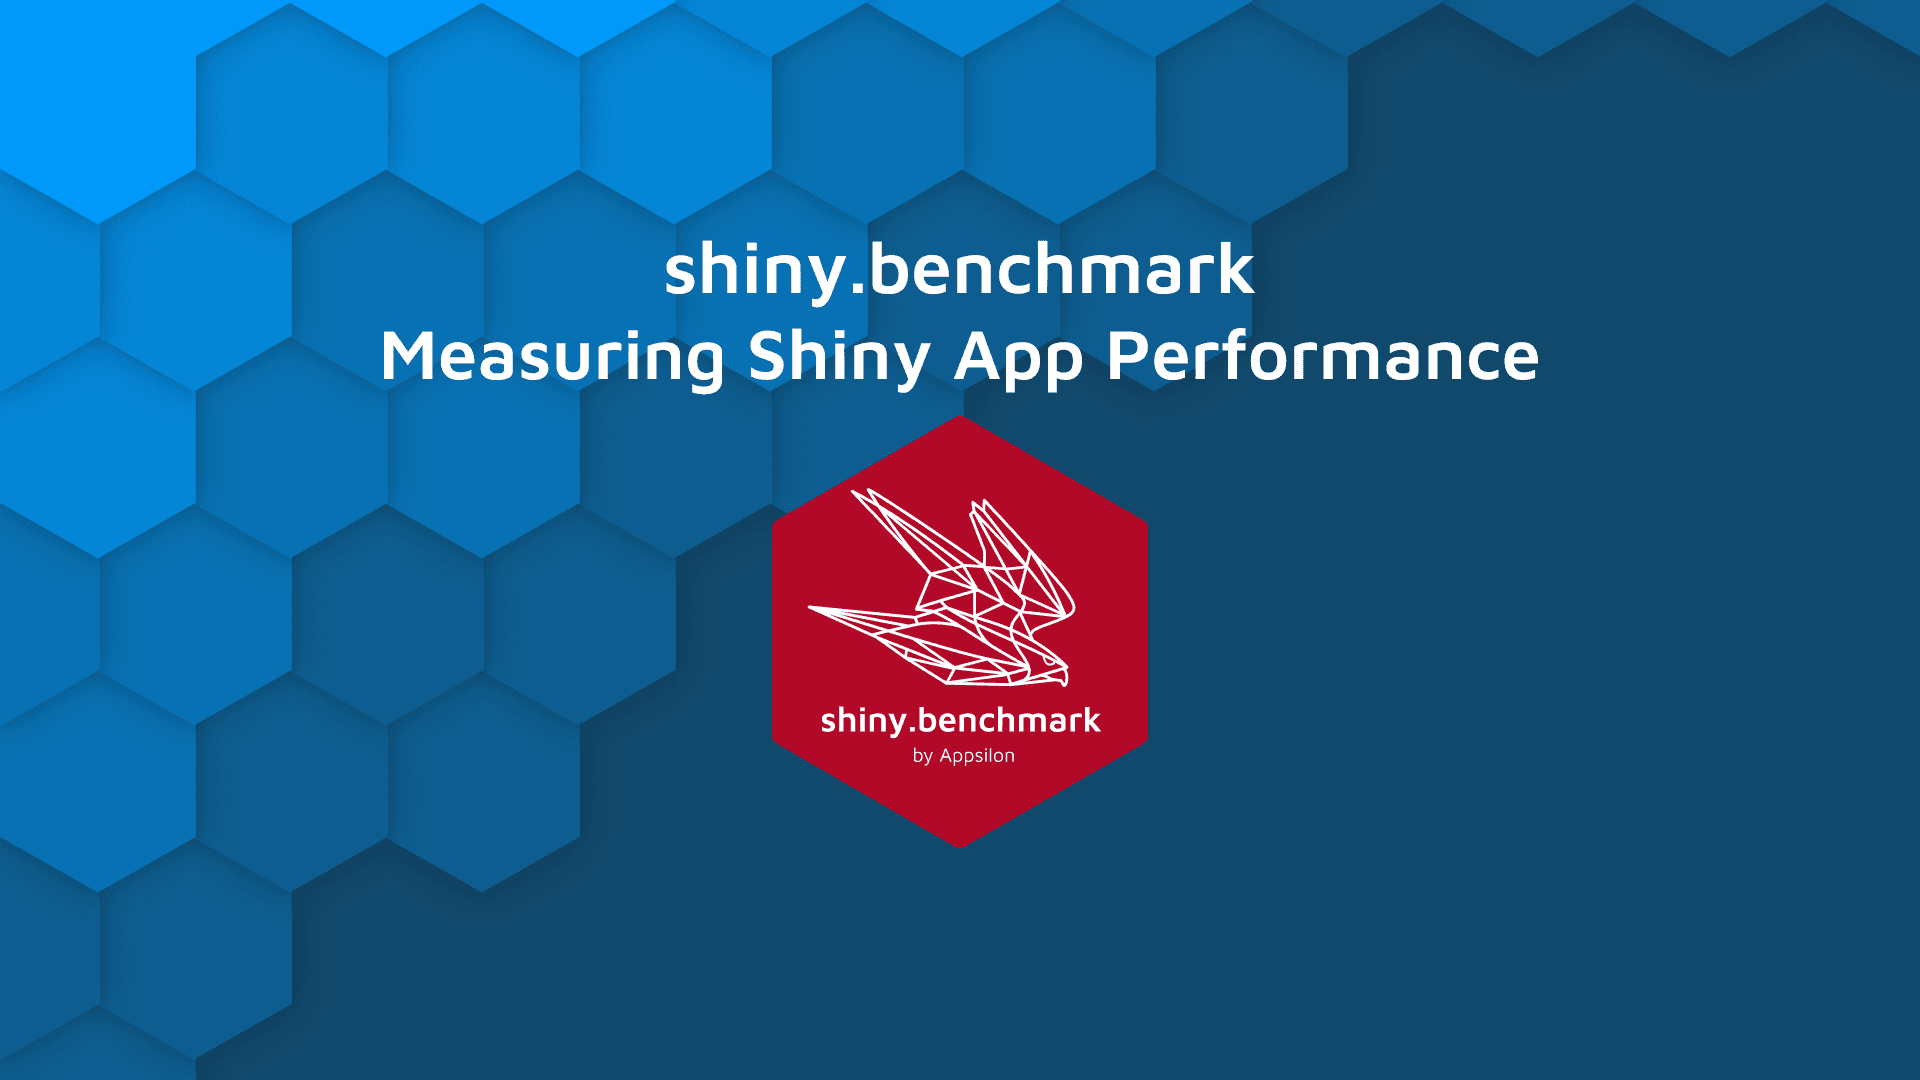 shiny.benchmark - measuring Shiny app performance blog banner